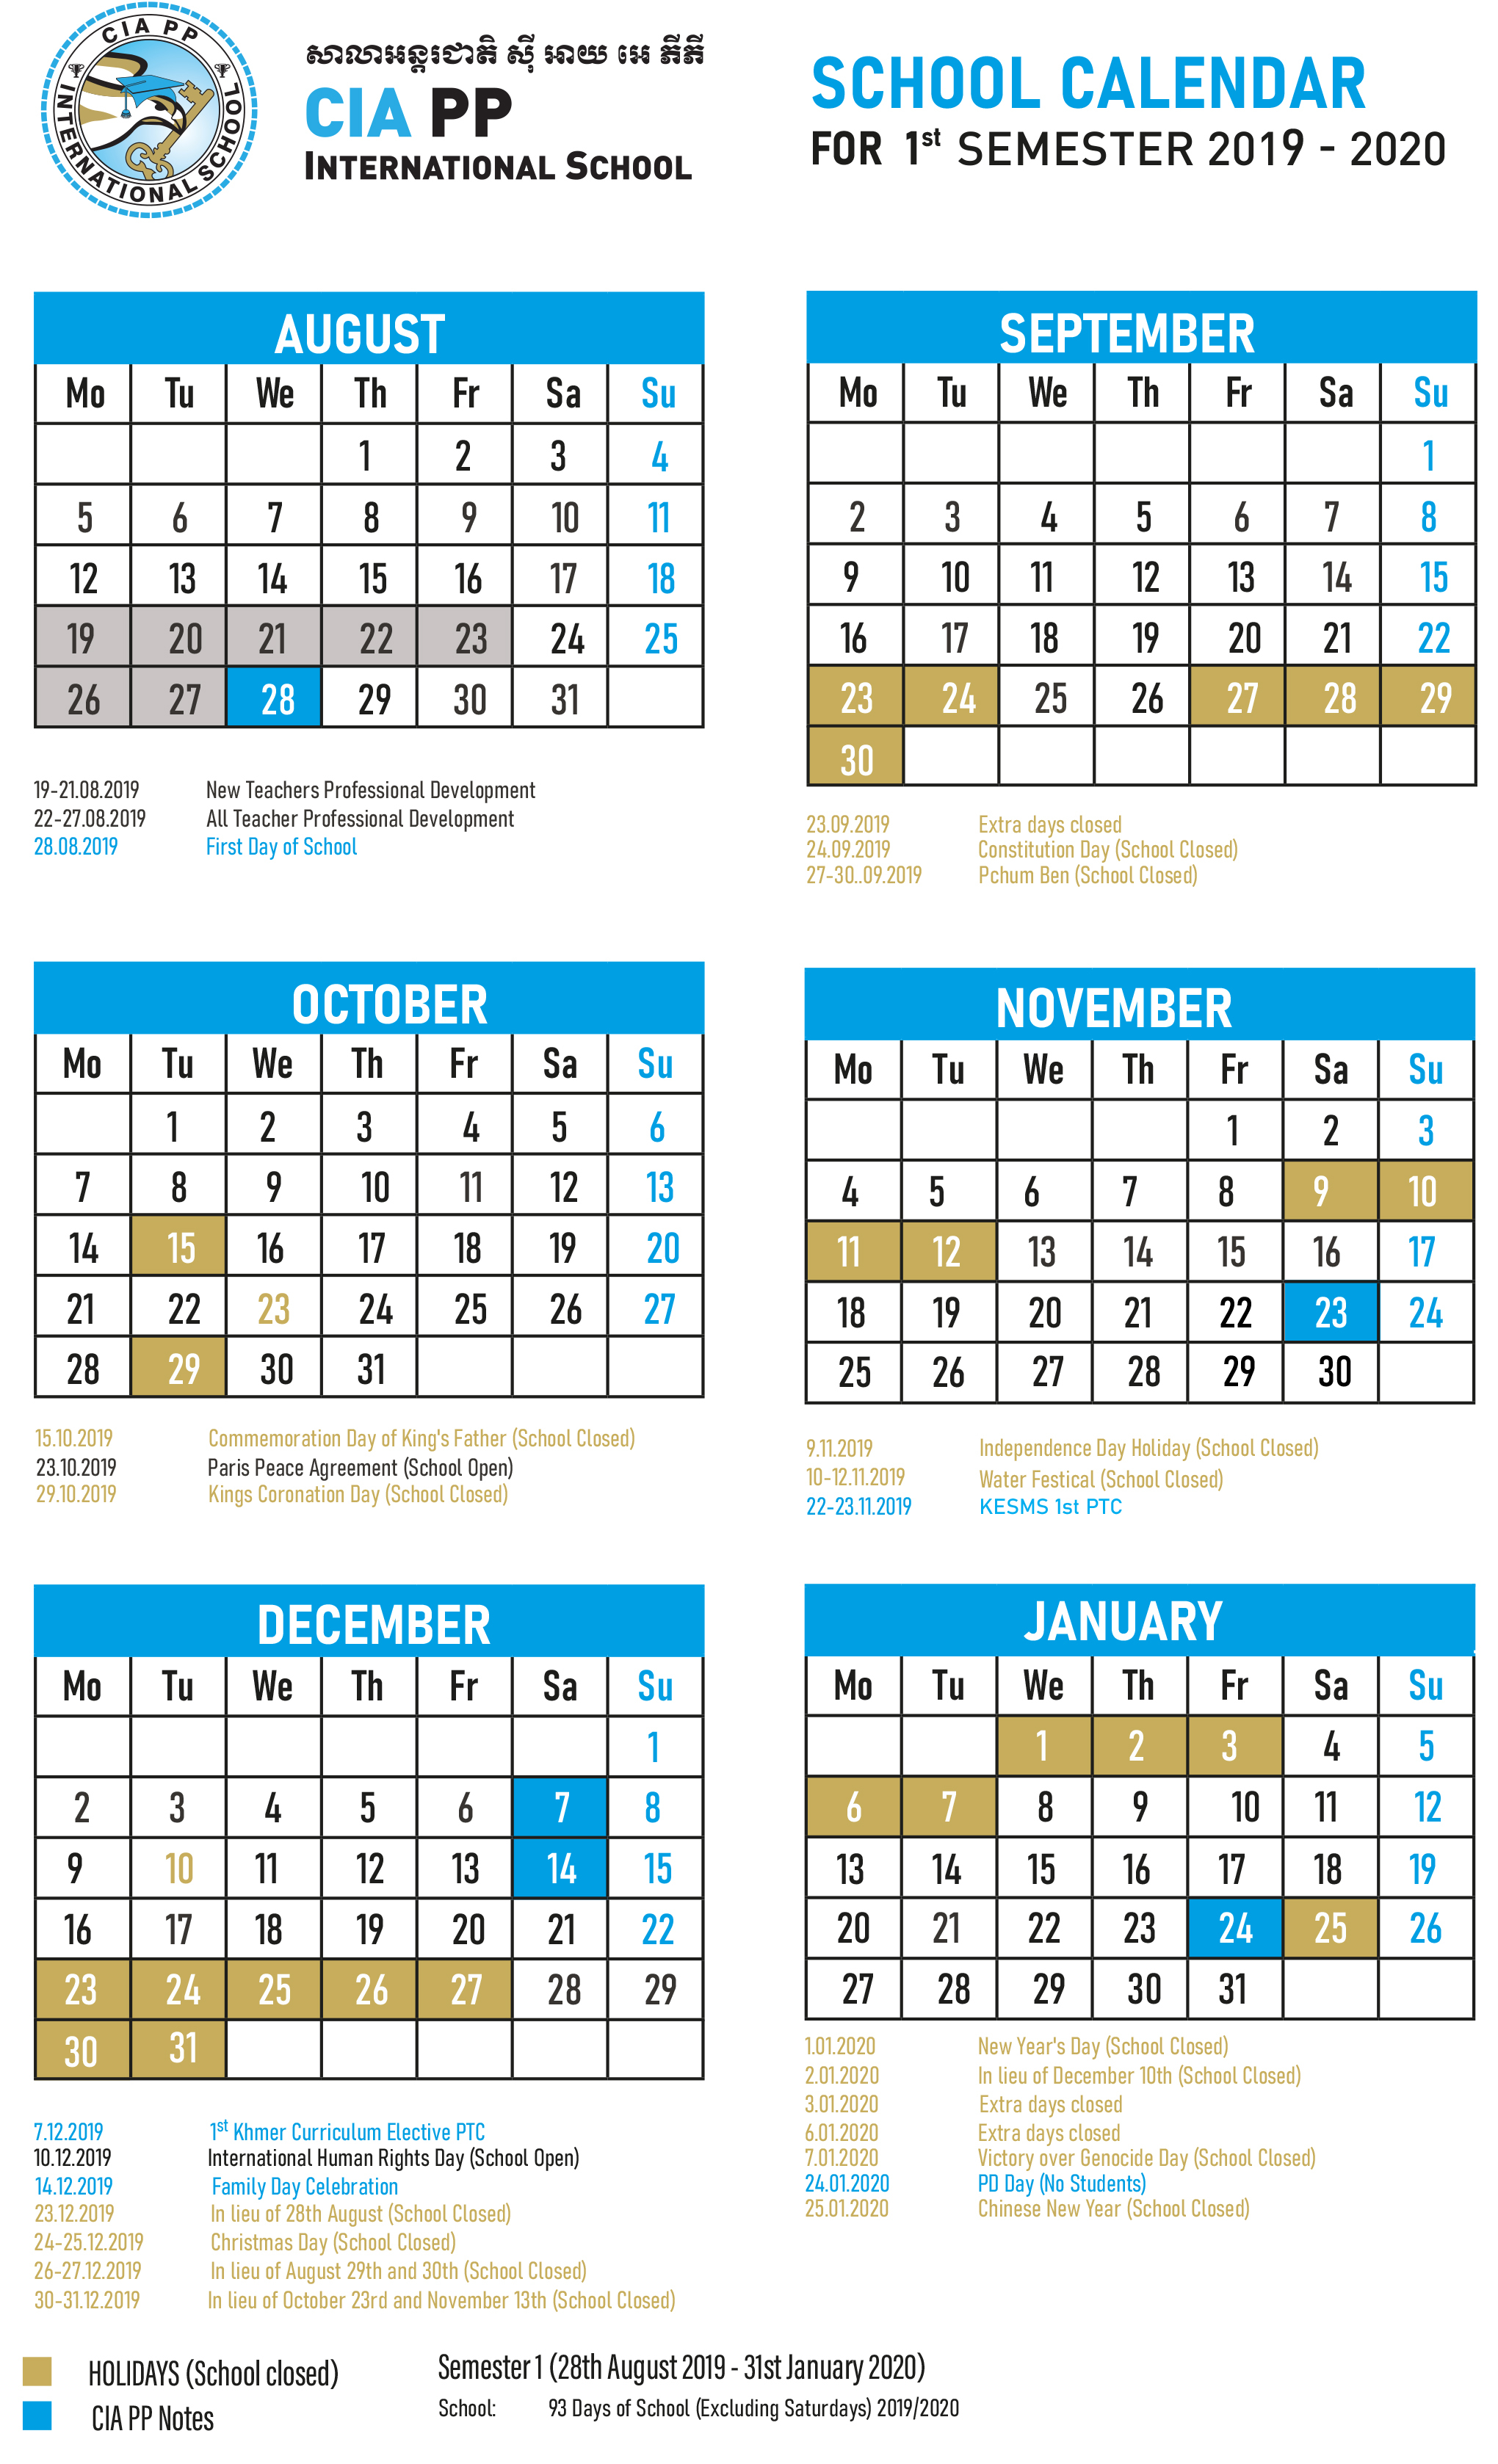 School Calendar in Khmer Calendar 2020 October